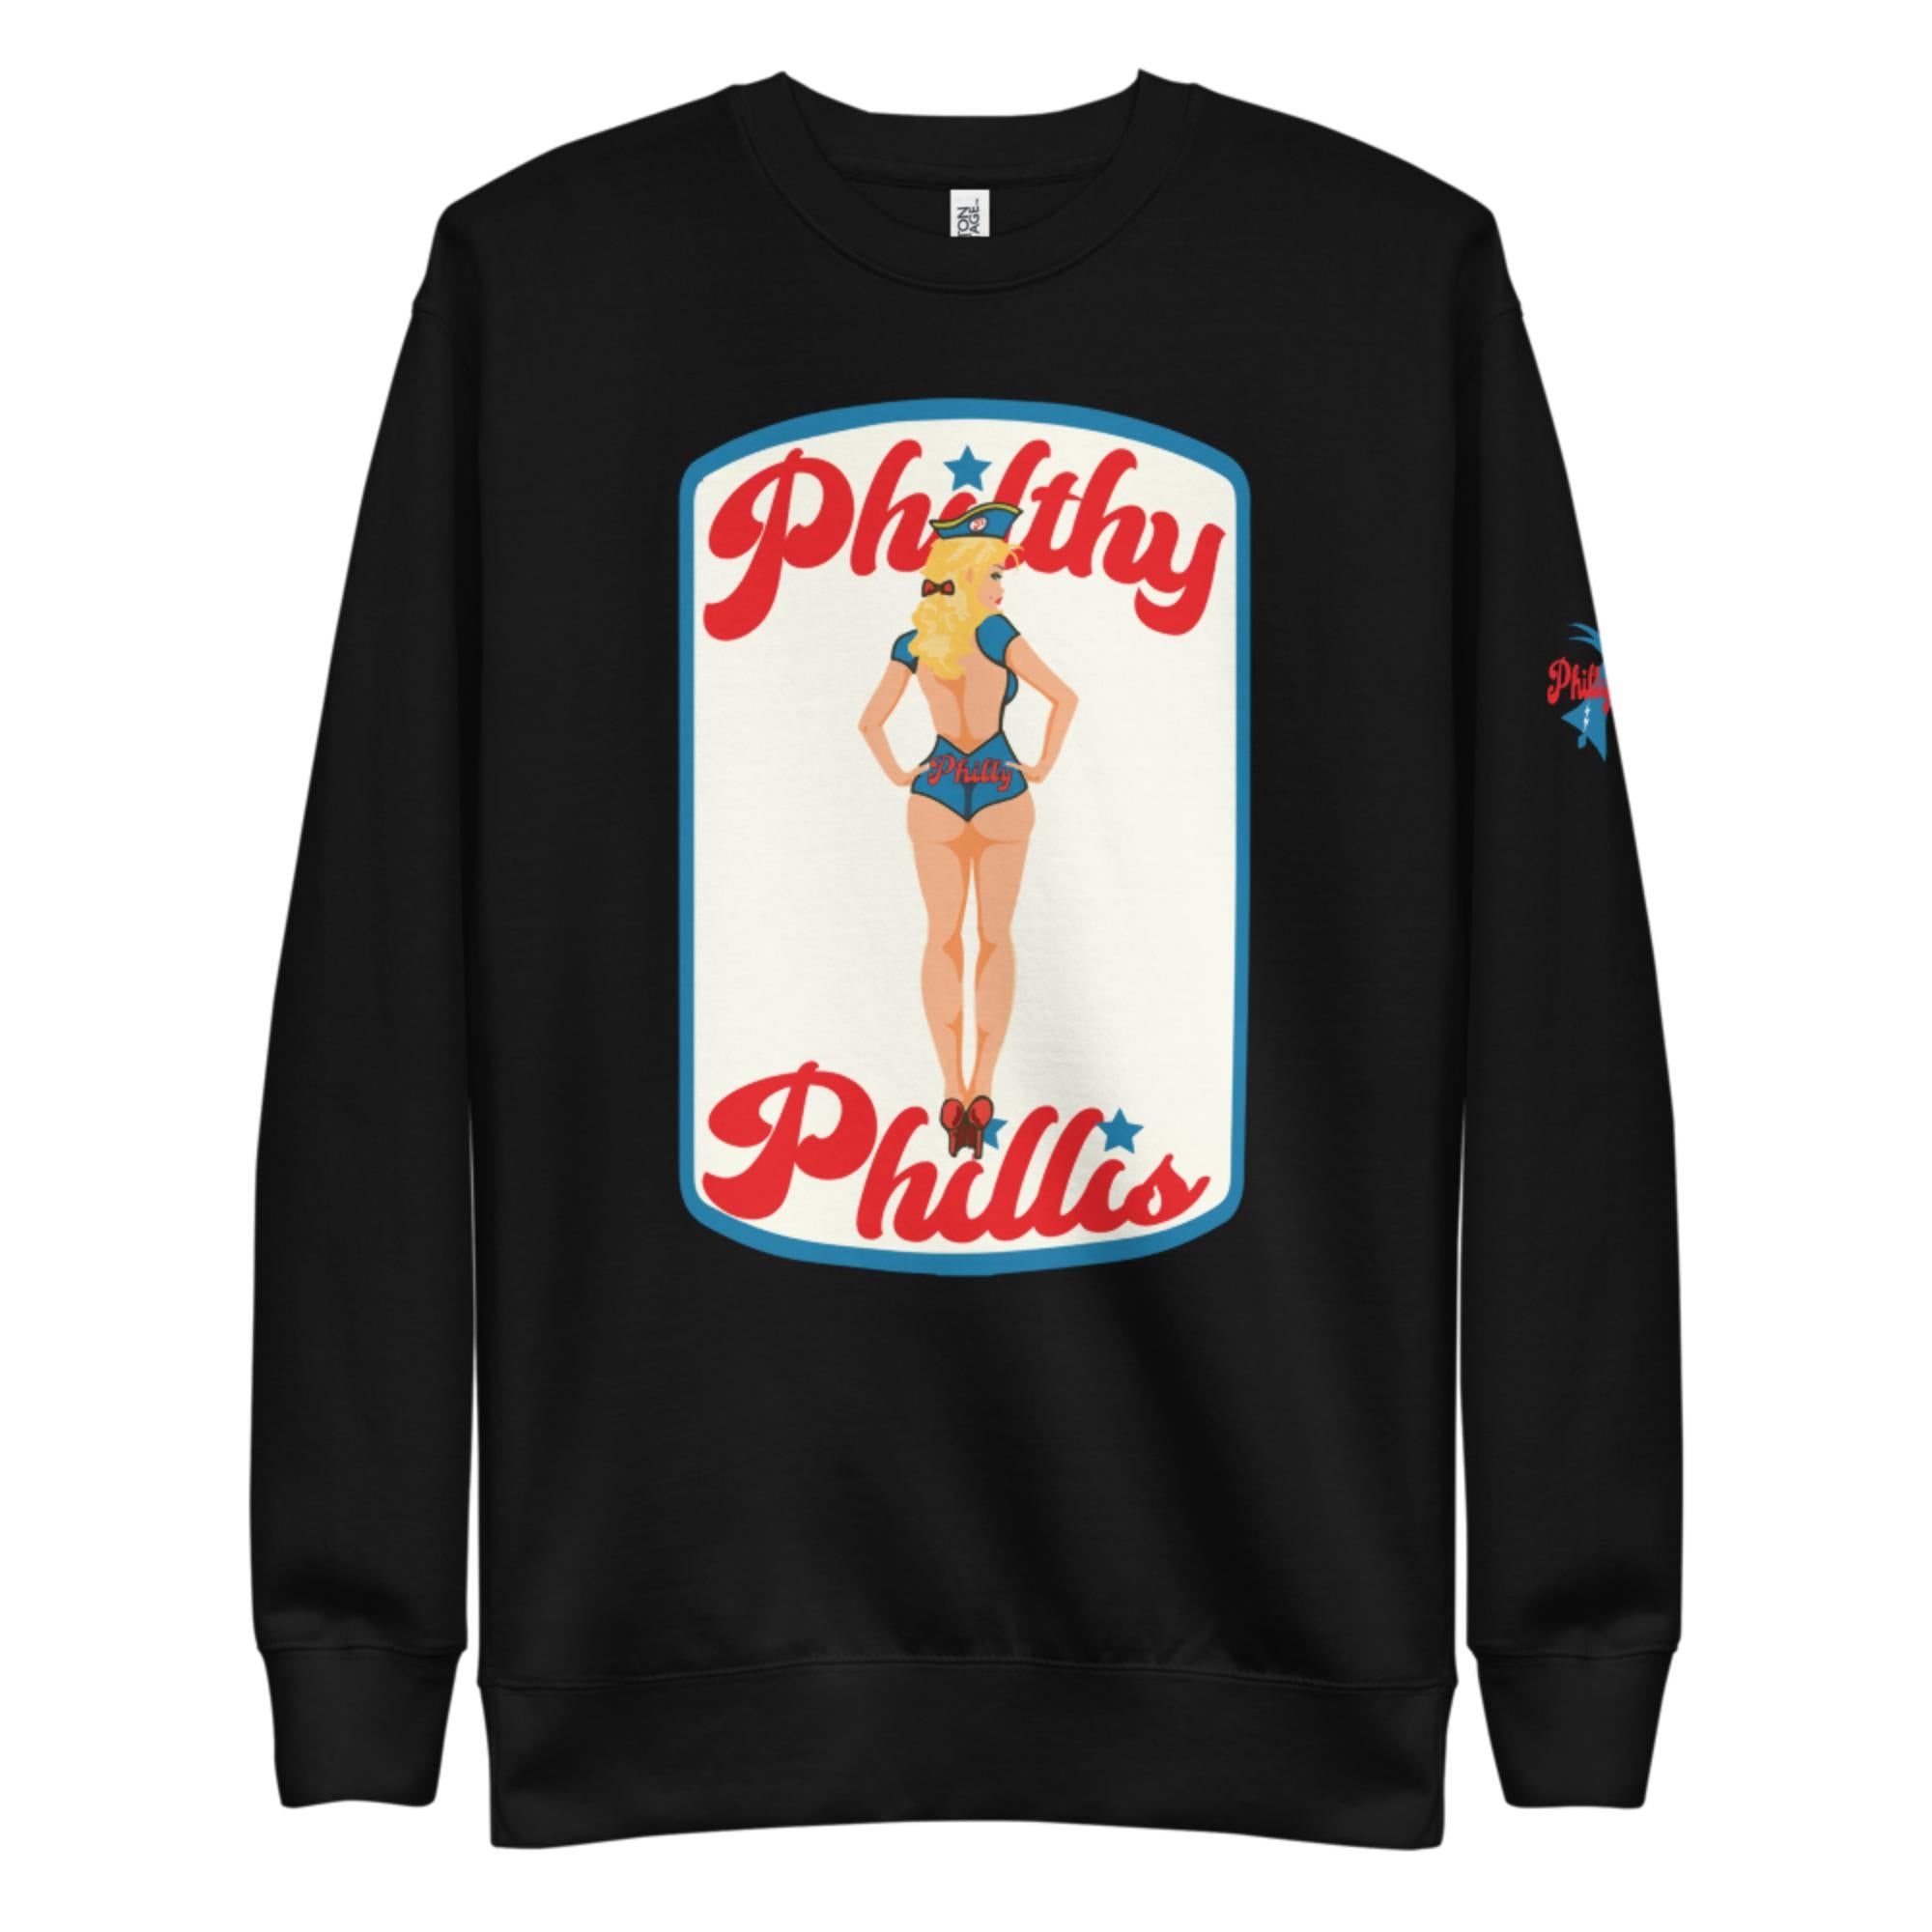 "Philthy Phillis" Sweatshirt